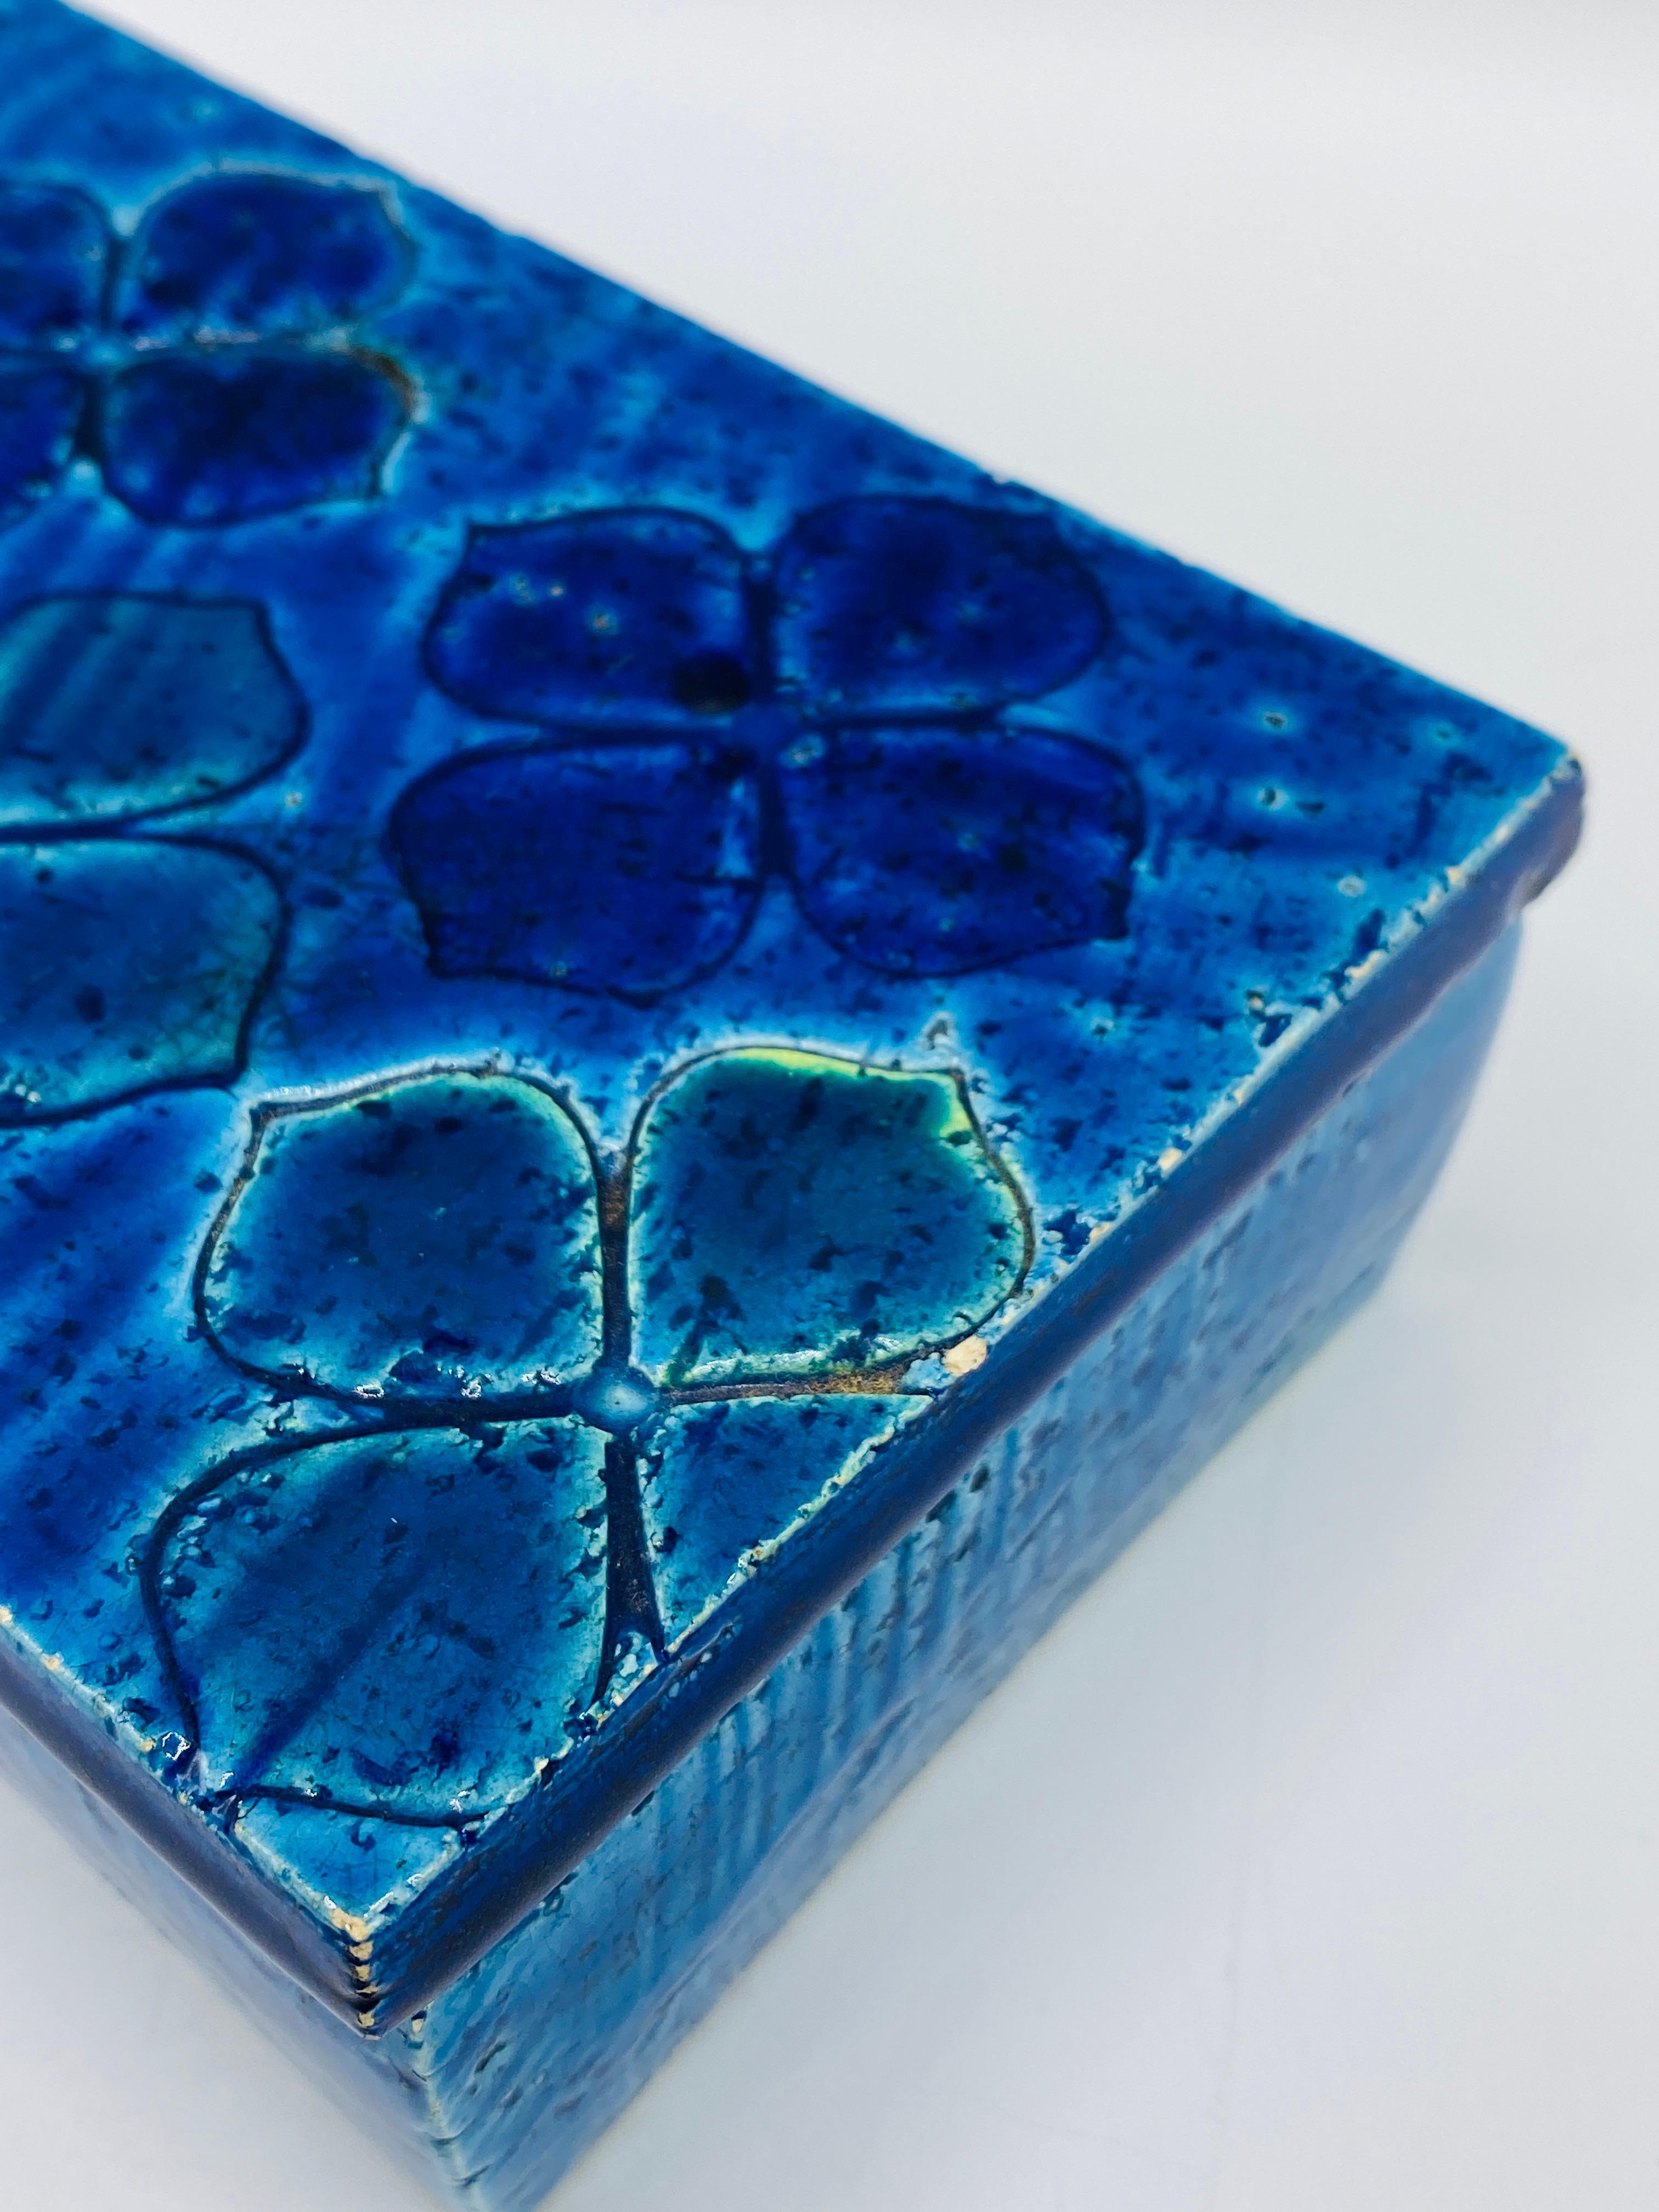 1960s Aldo Londi Bitossi 'Blue Rimini' Clover Box, #10/20 For Sale 5